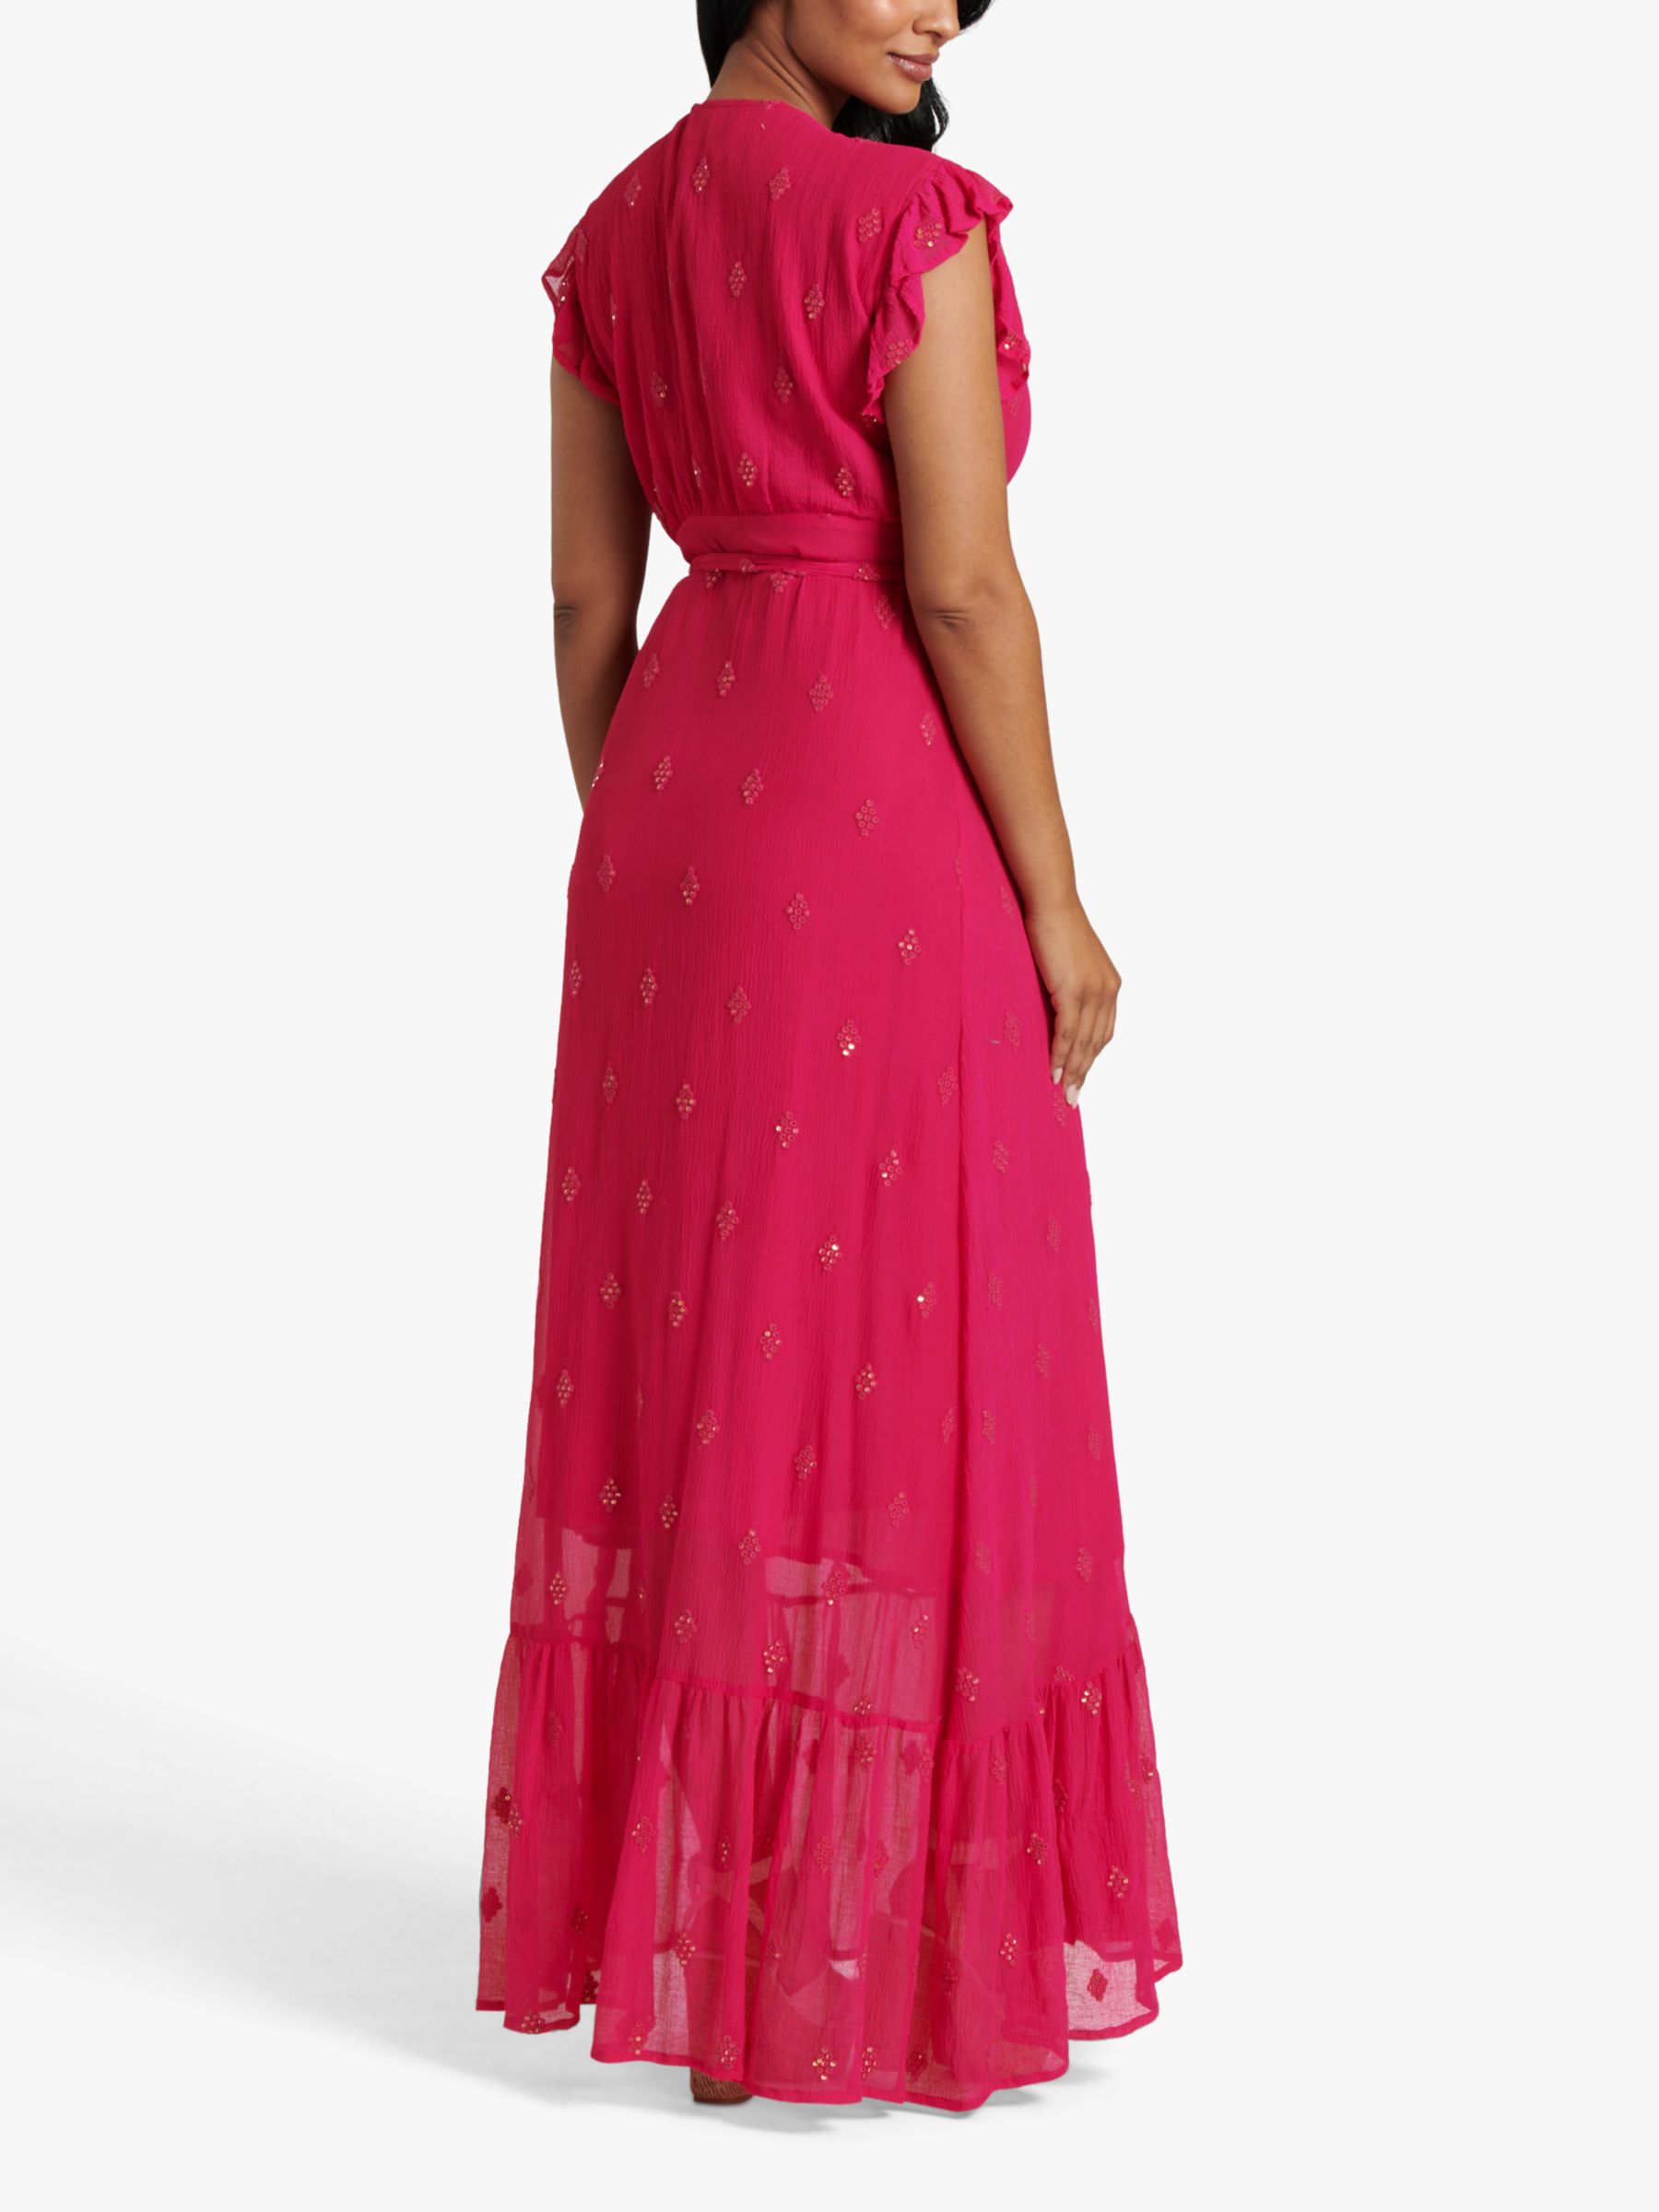 South Beach Sequin Detail Wrap Maxi Dress, Pink, 8